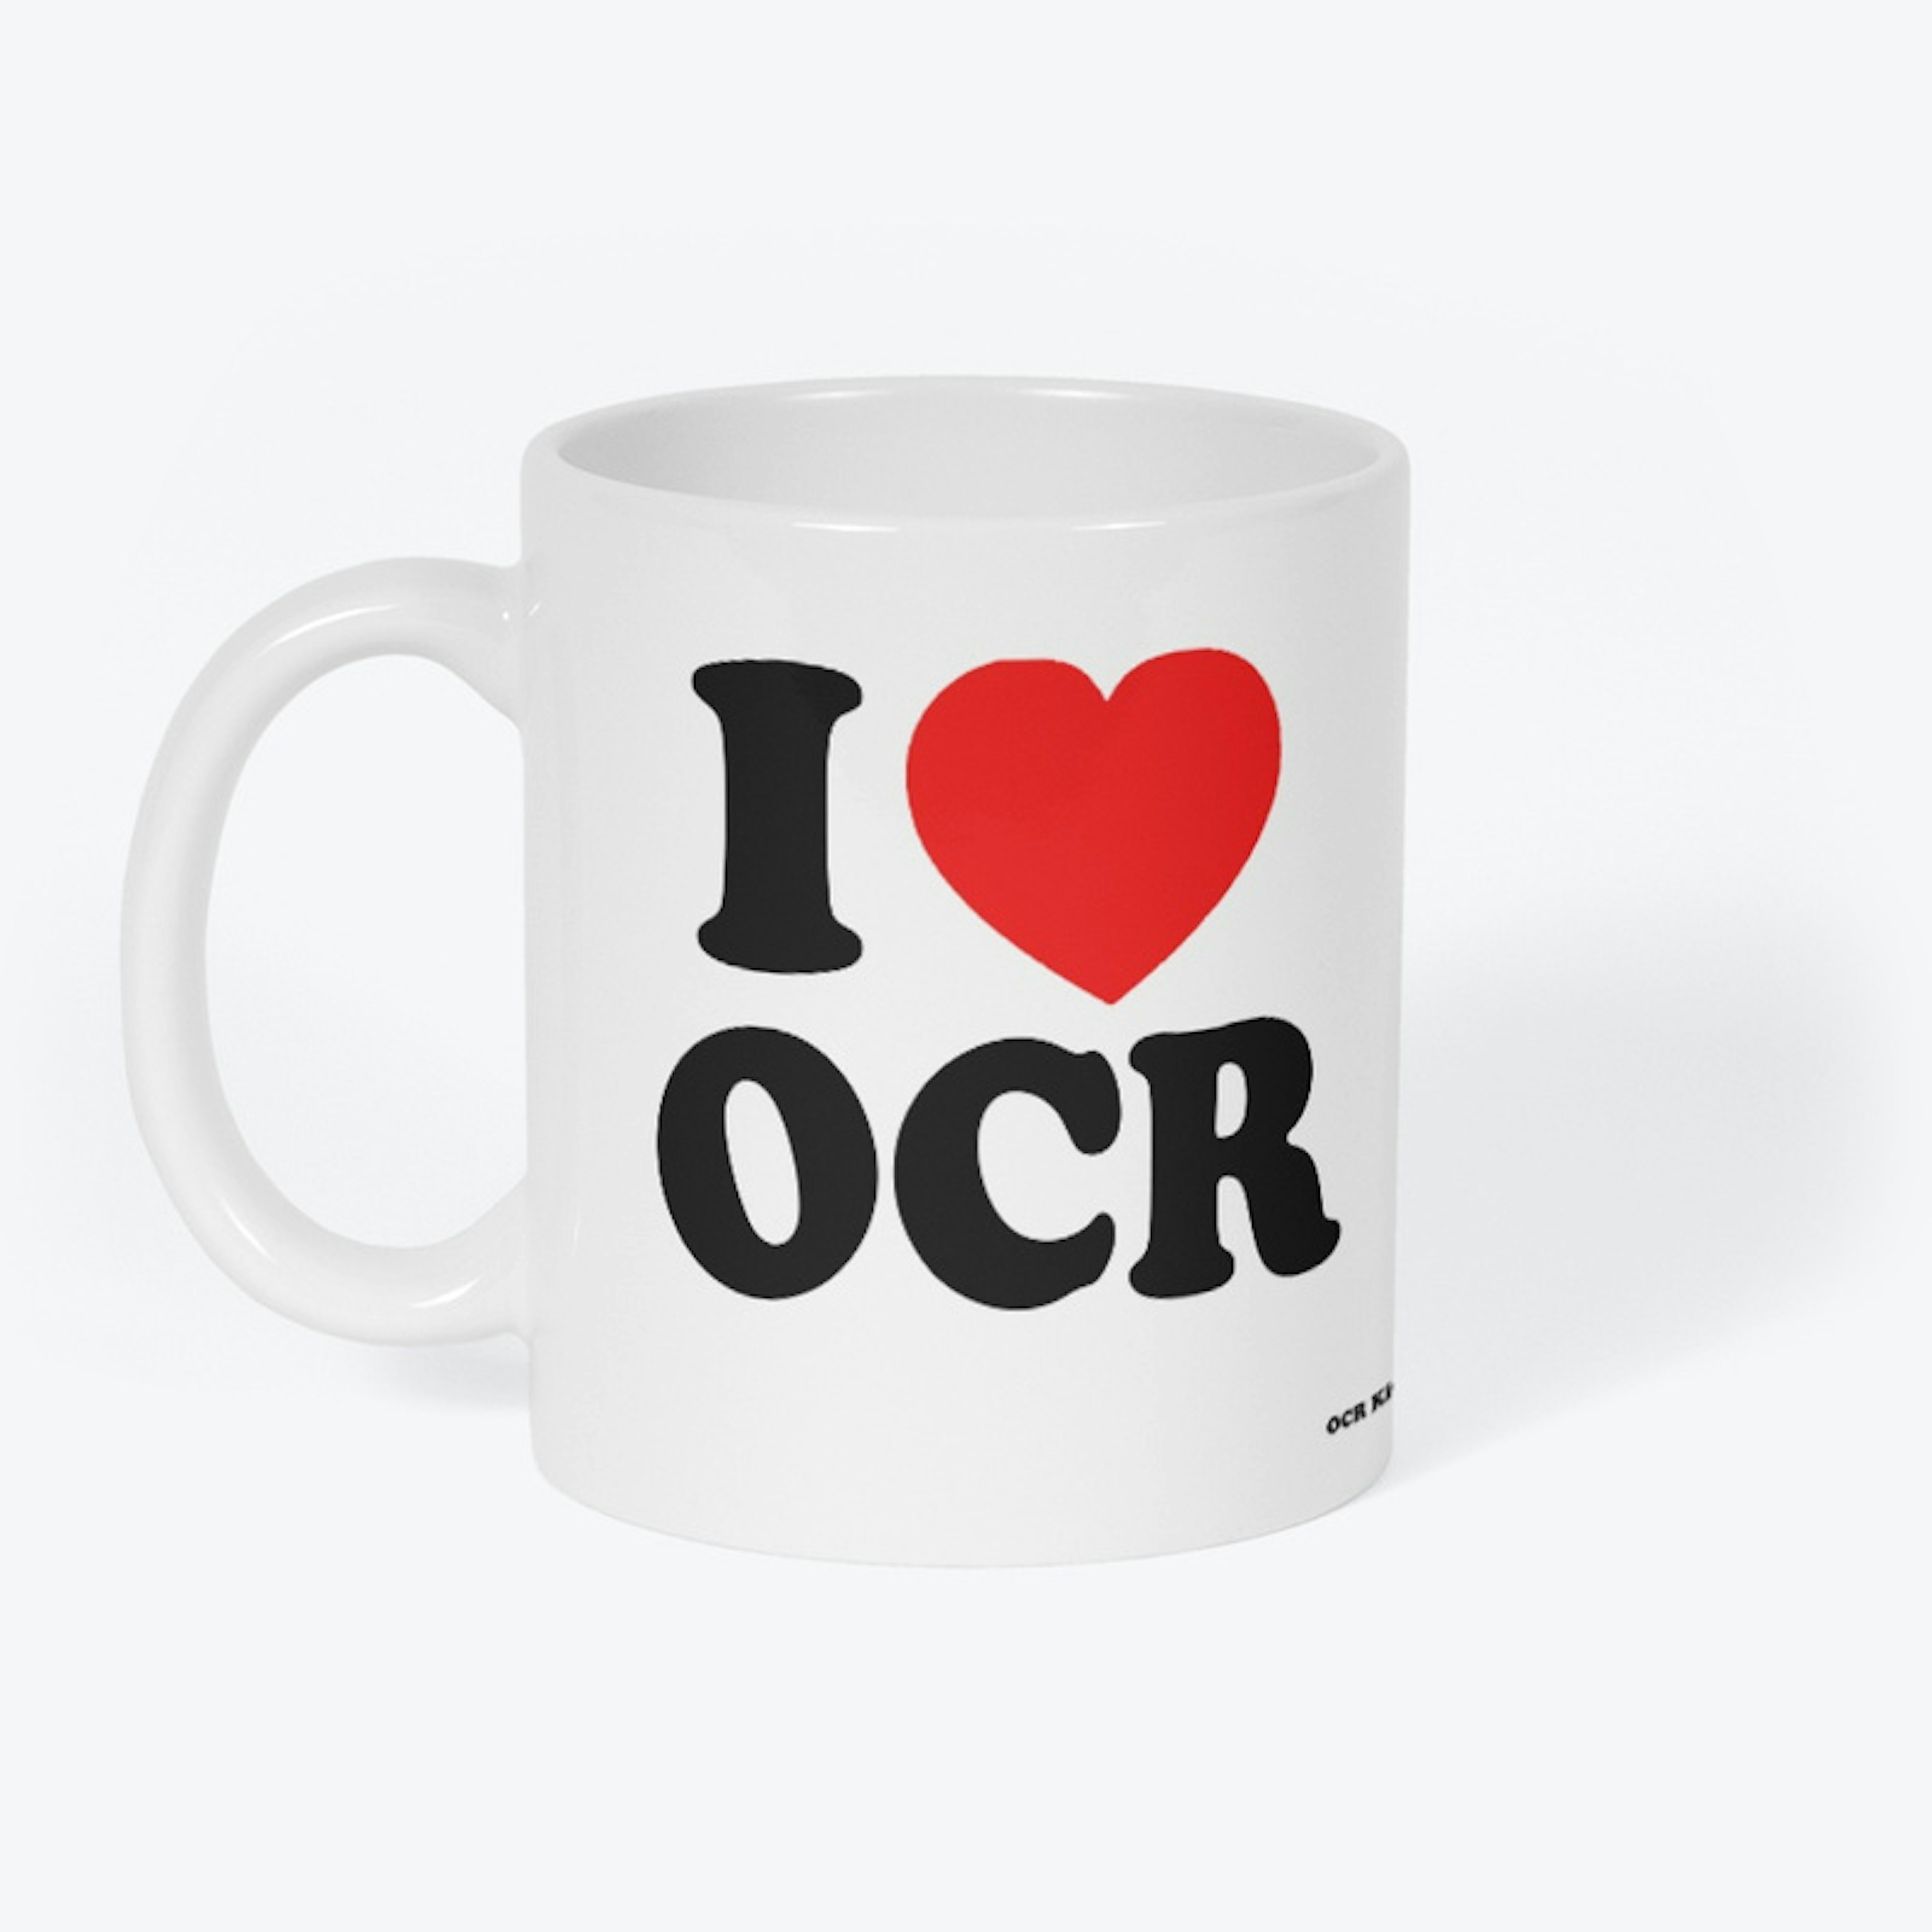 I Love OCR Mug